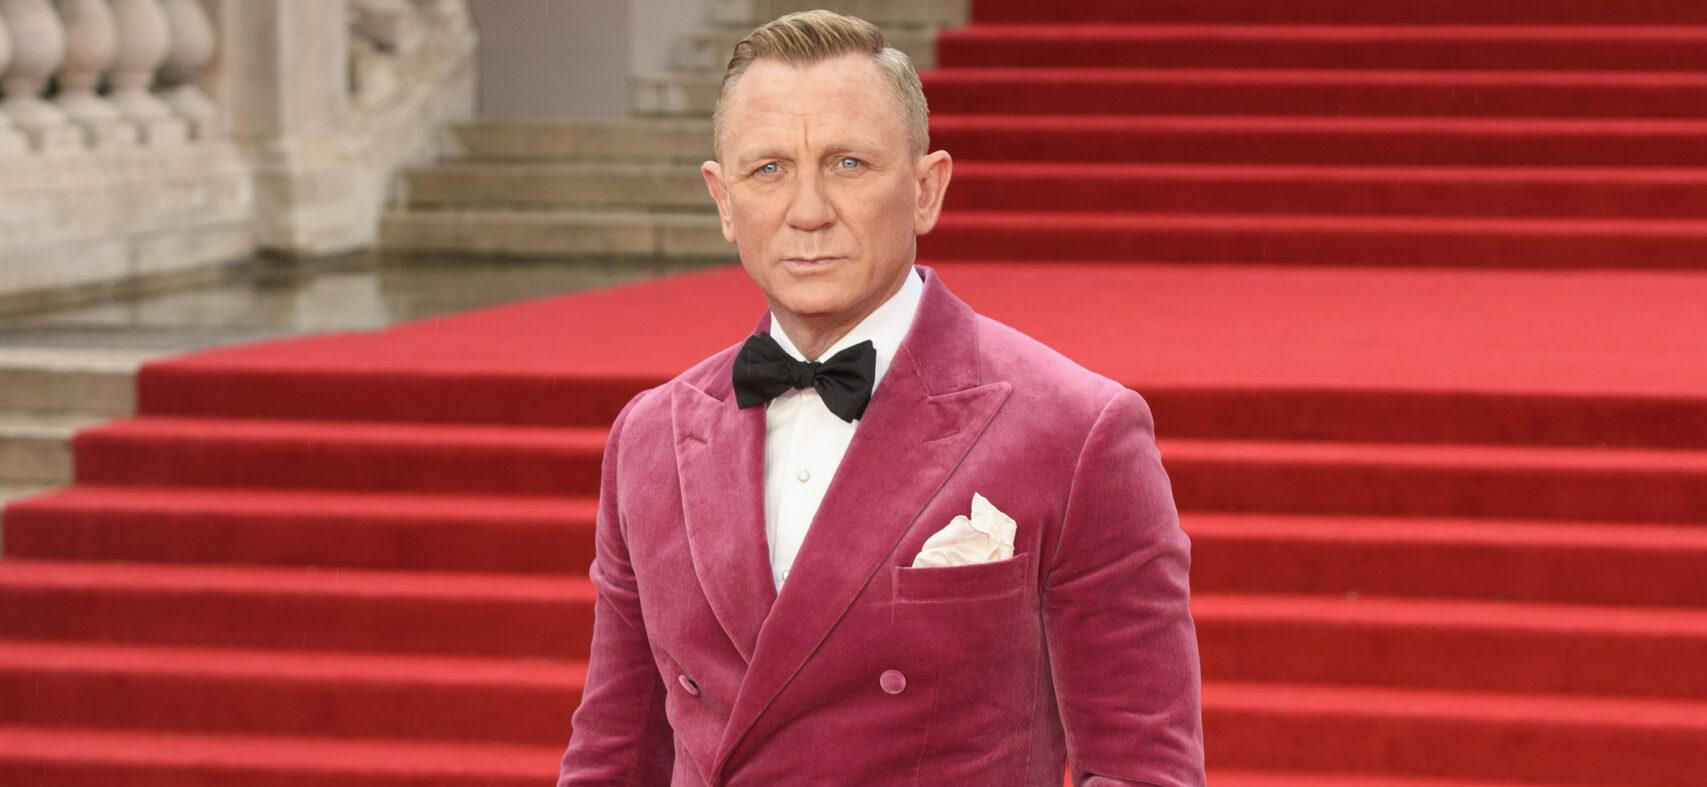 The Real Reason Daniel Craig Avoided Stunts In the Latest ‘James Bond’ Flick